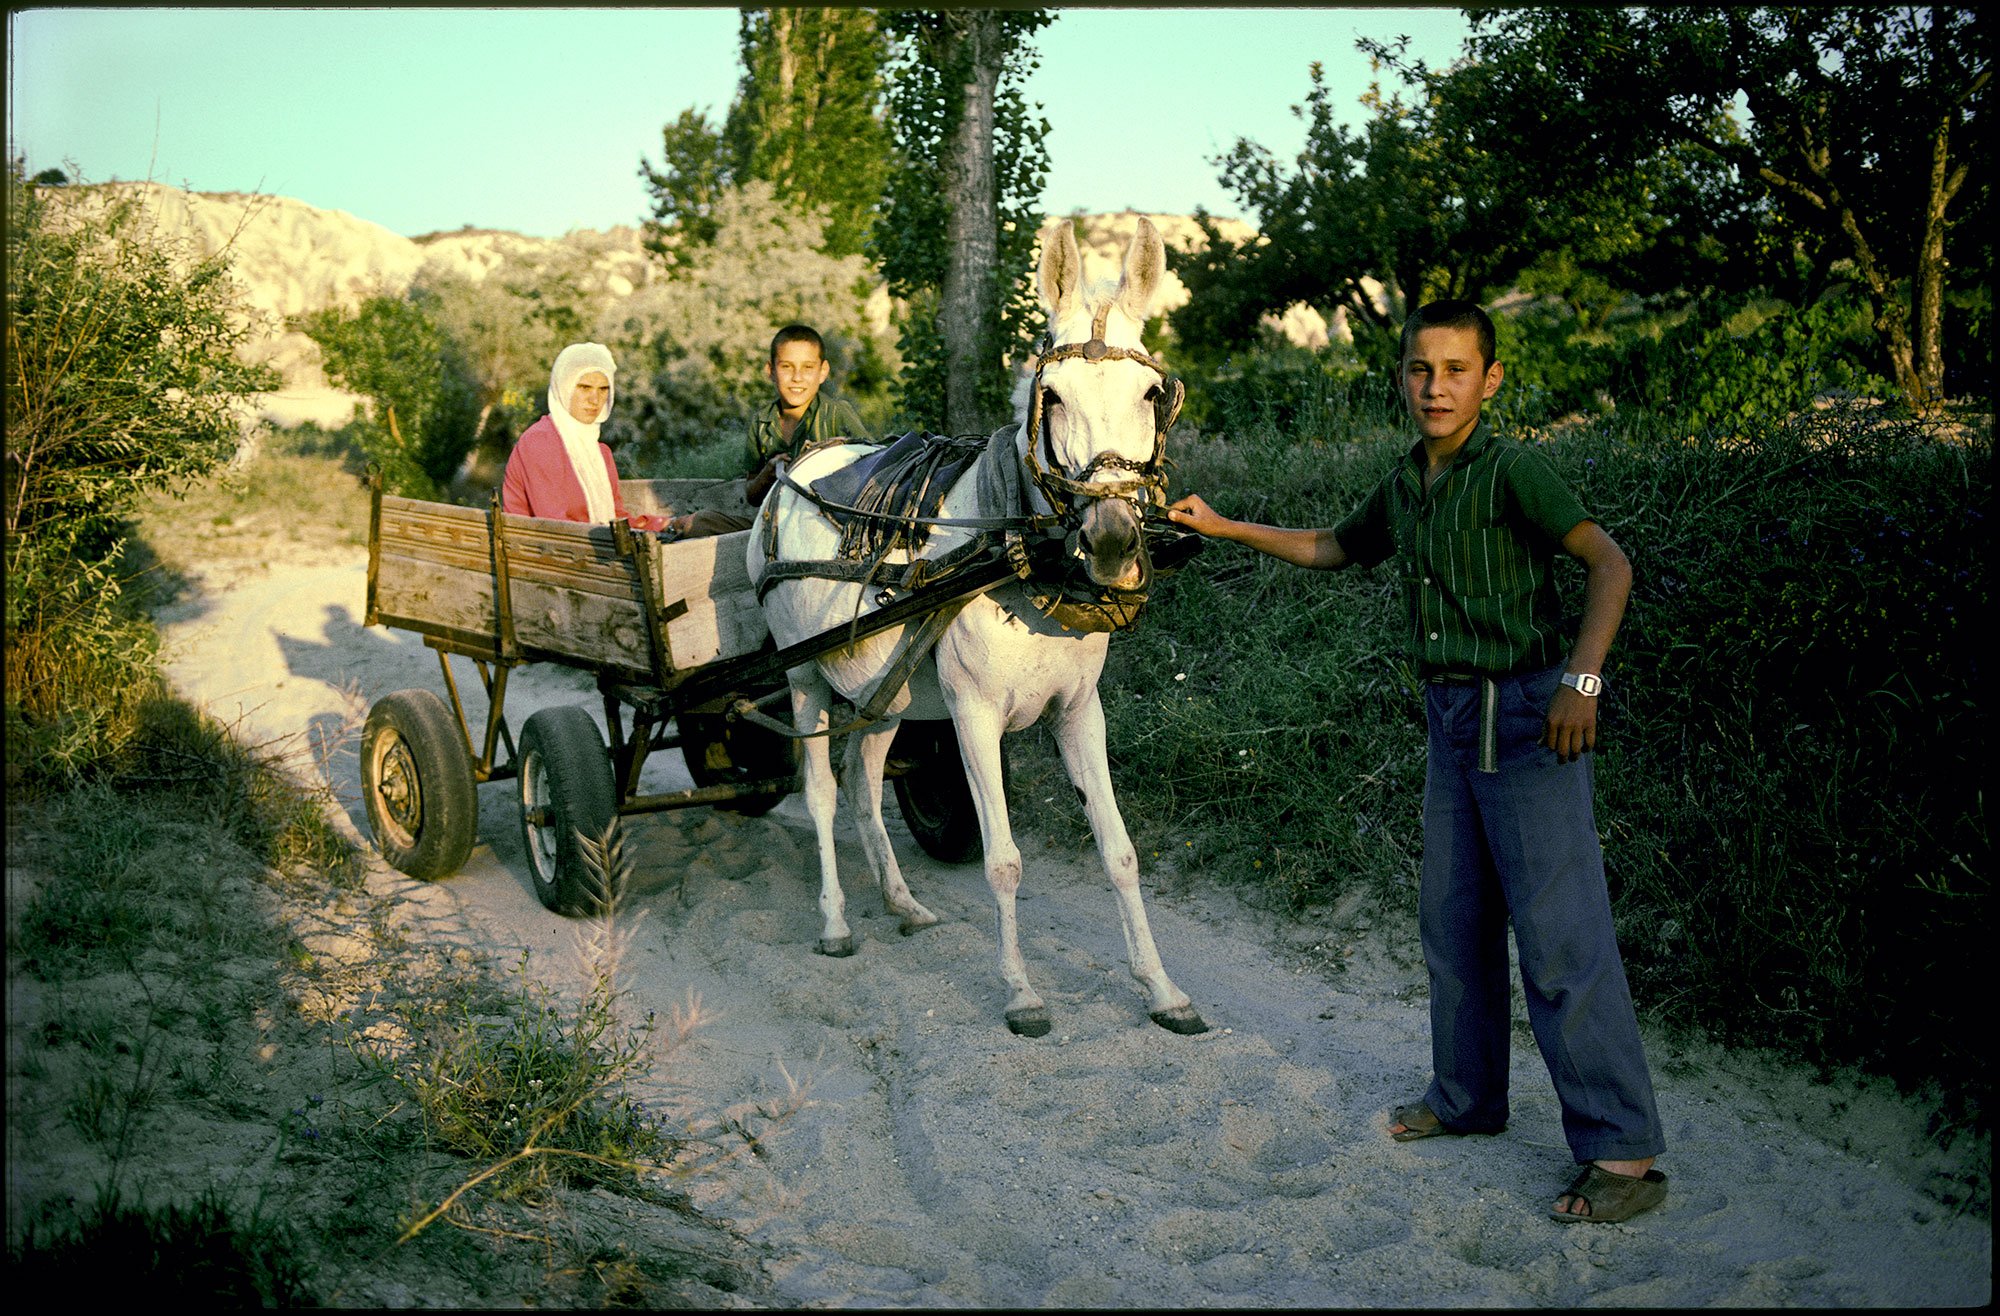 cappadocia, turkey 1987